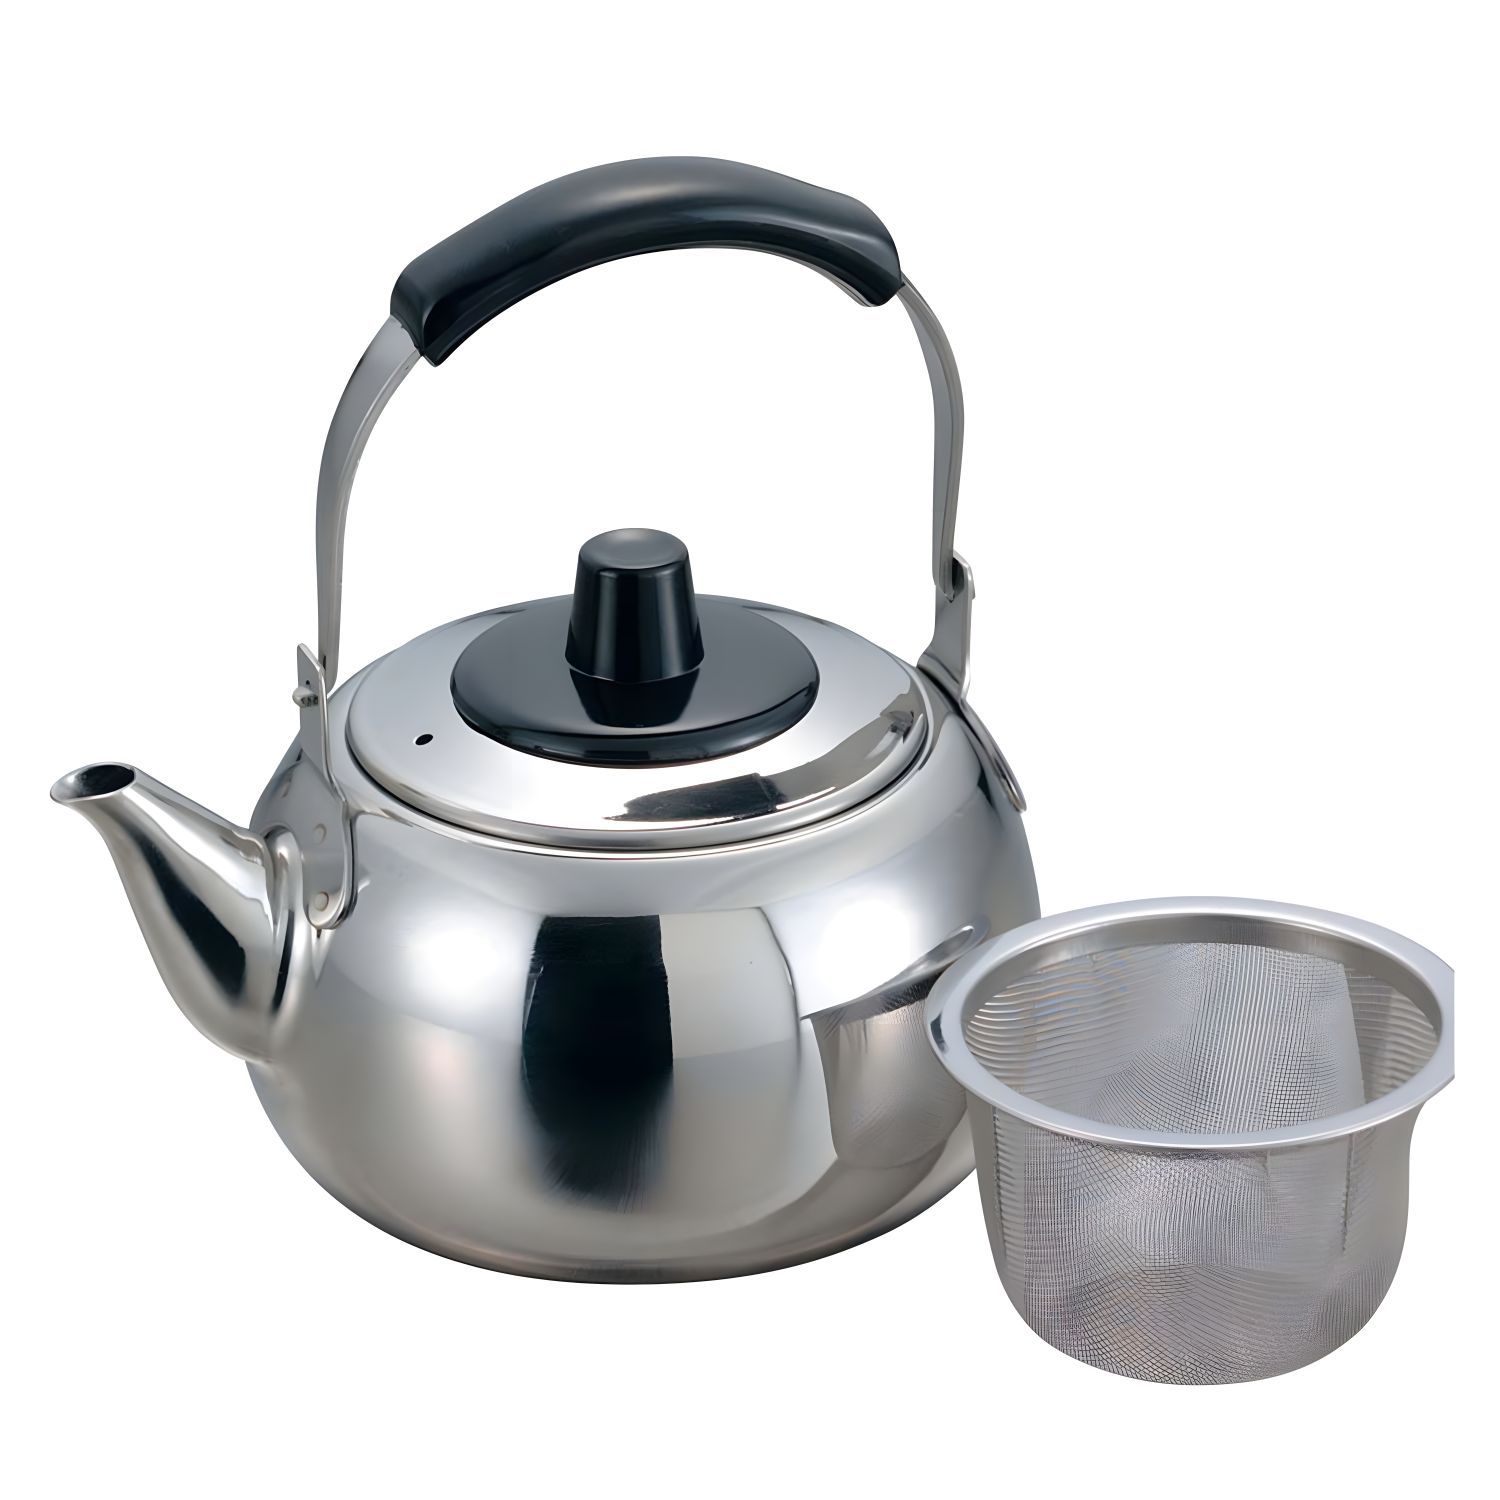 Vintage Soviet Stainless Steel Teapot. Silver Metal Tea Pot